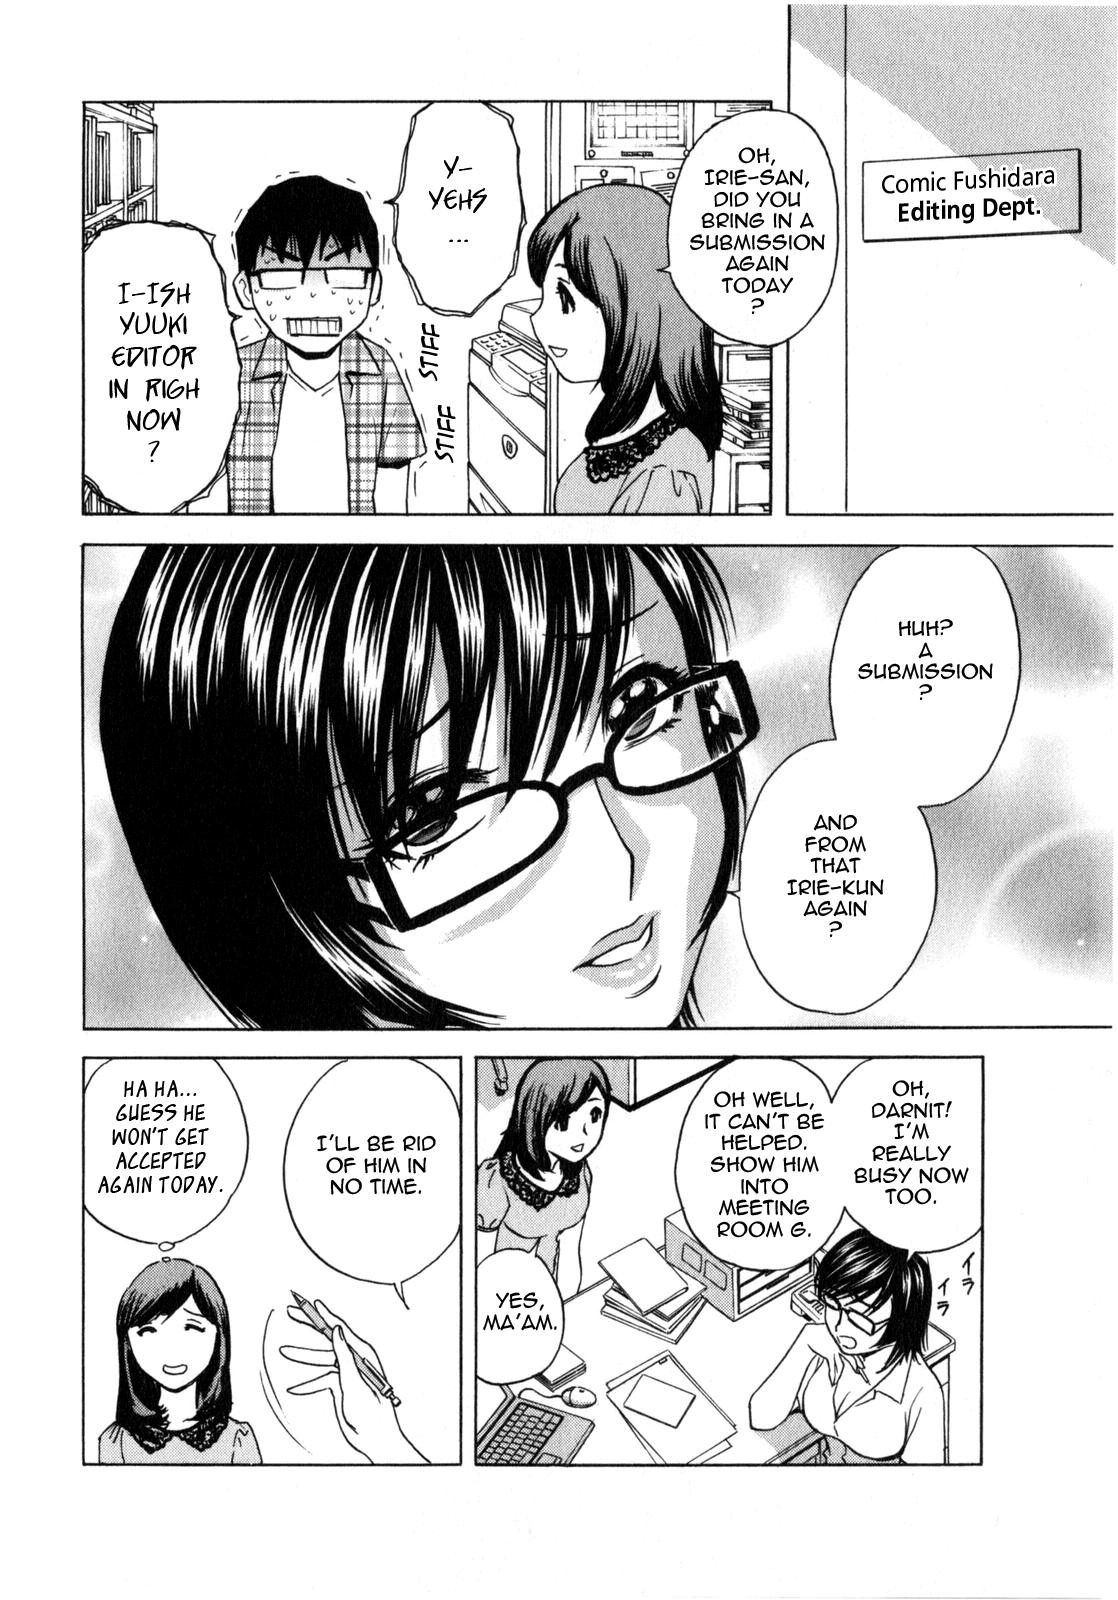 [Hidemaru] Life with Married Women Just Like a Manga 1 - Ch. 1-7 [English] {Tadanohito} 107